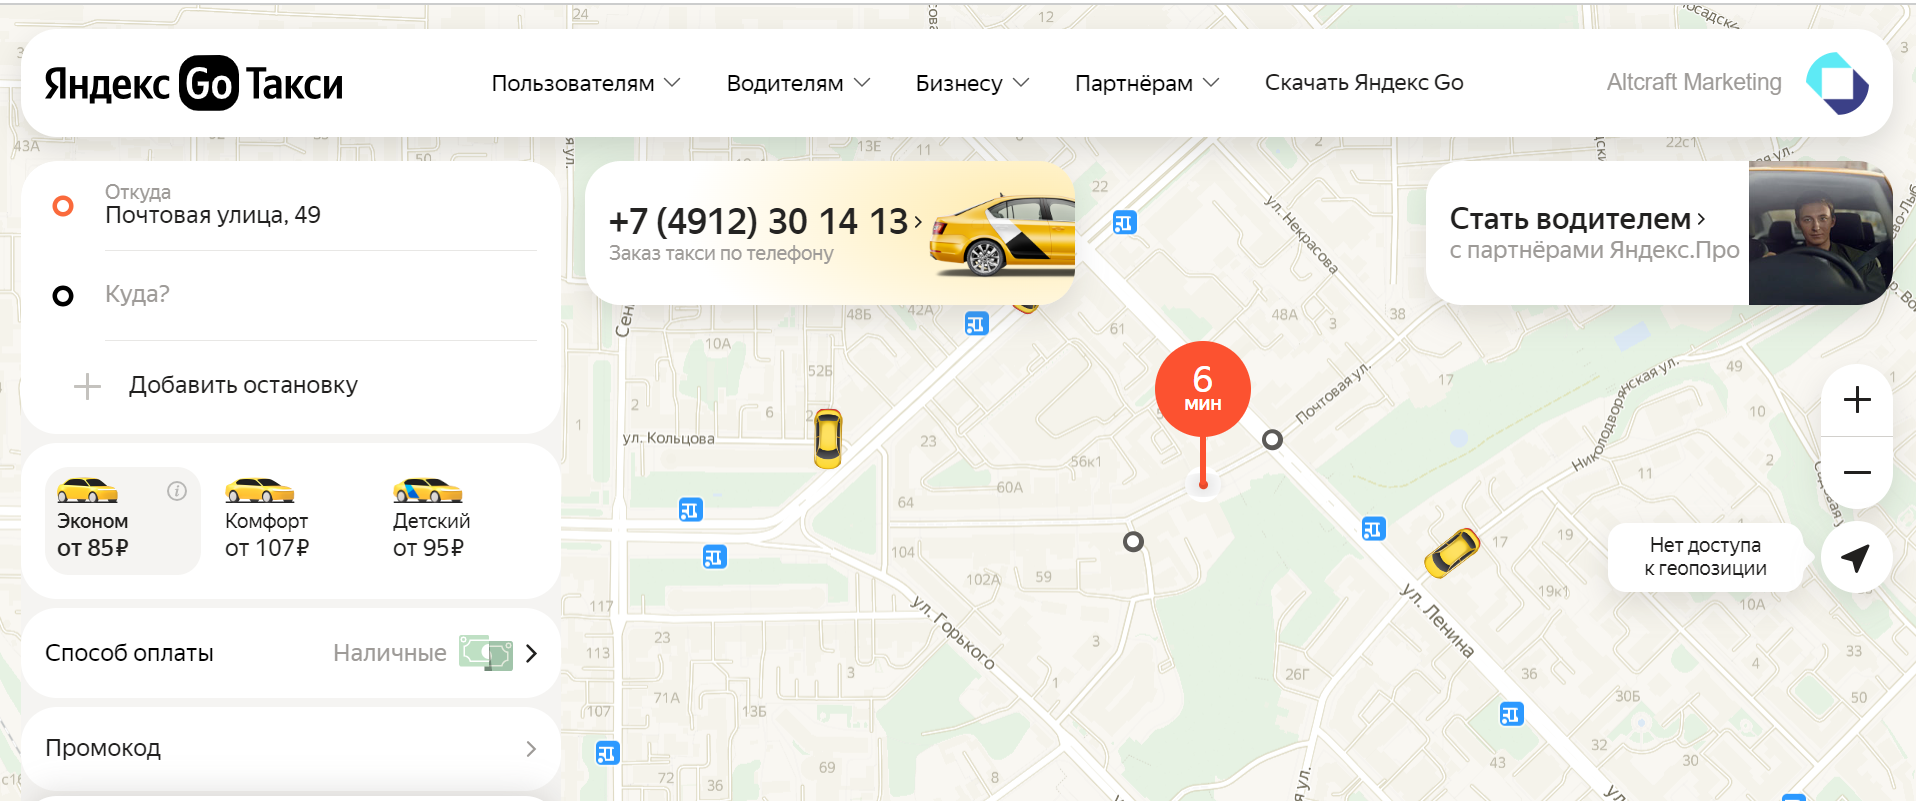 Интерфейс яндекс такси